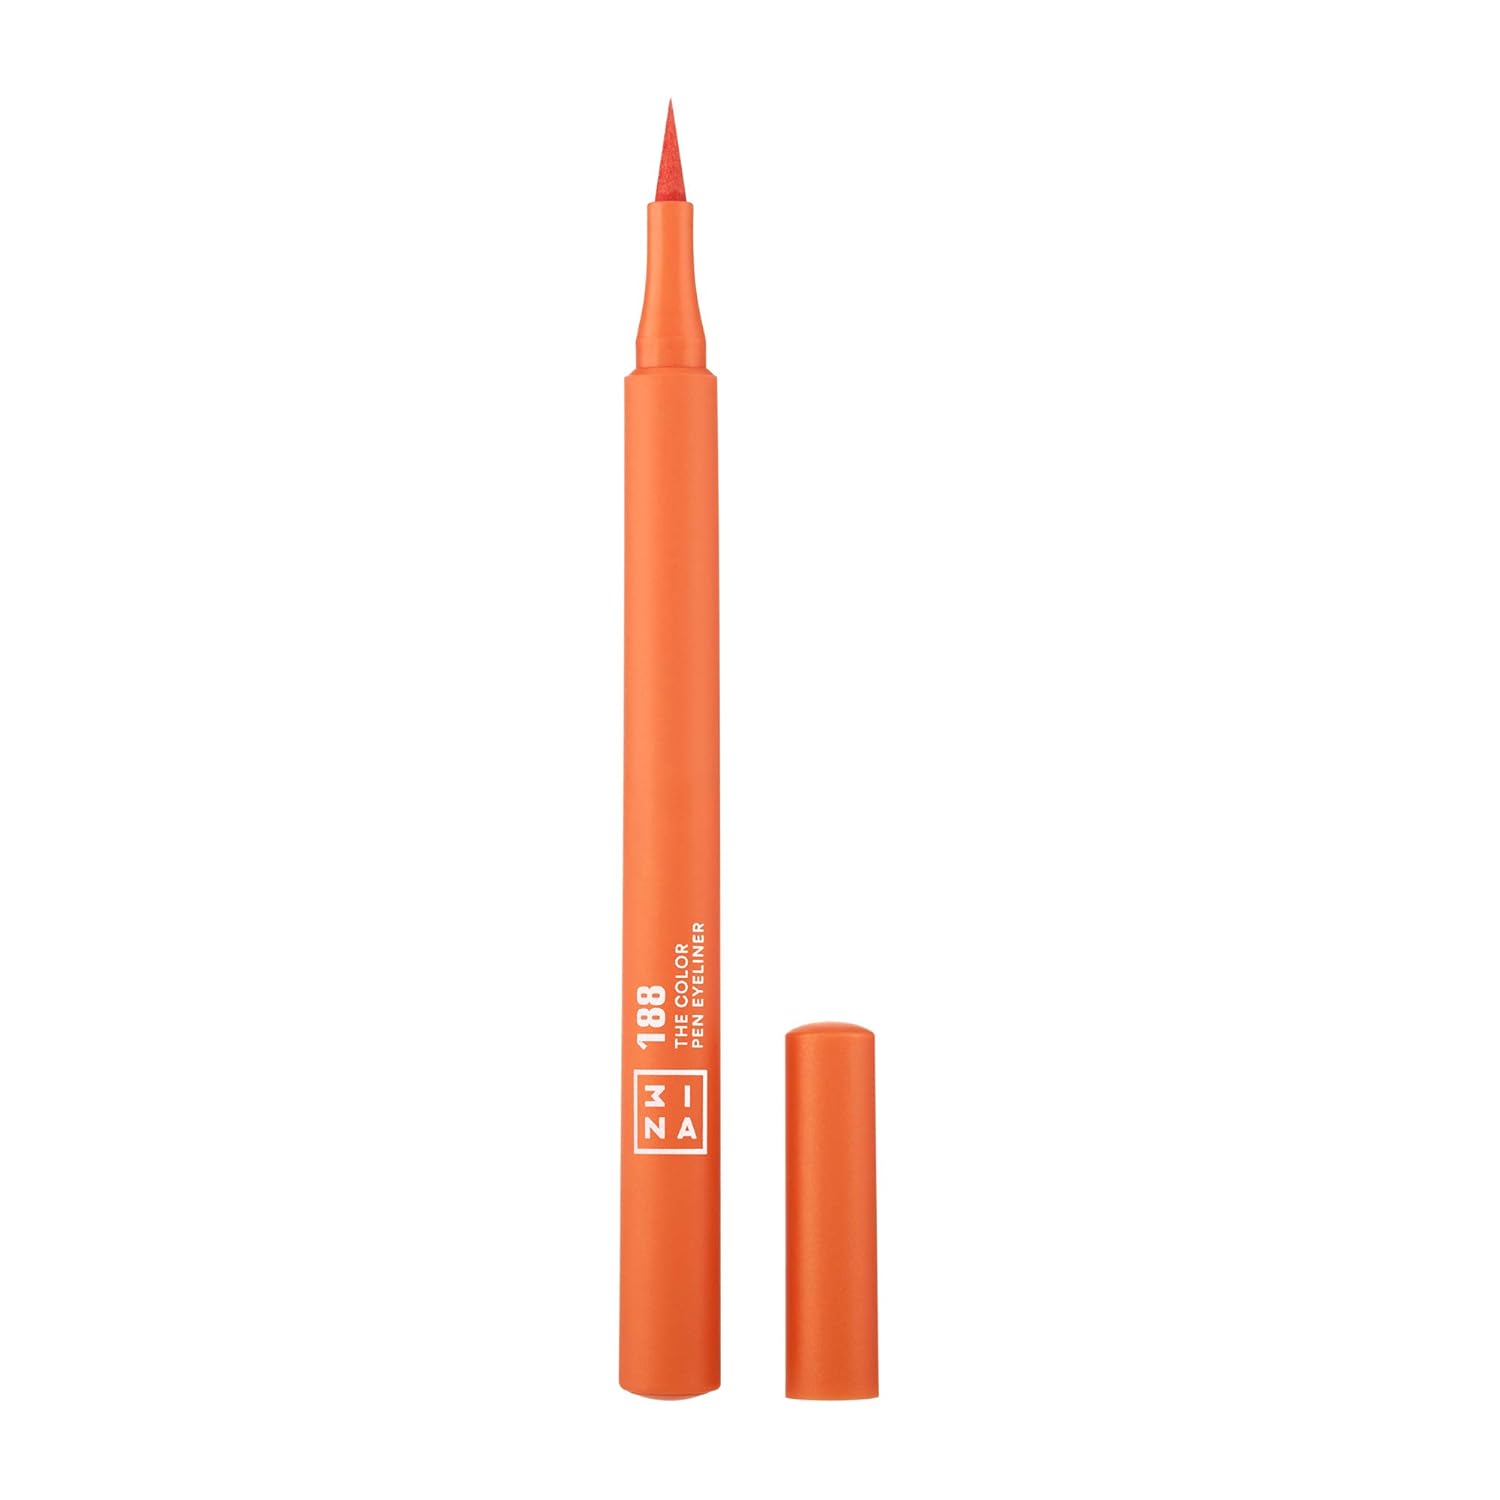 3ina make -up - The Color Pen Eyeliner 188 - Orange Liquid Eyeliner - 10H Long -Lasting Matte Eyeliner Pen with Precision Tip - Highly Pigmented Liquid Liner - Vegan - Cruethy Free